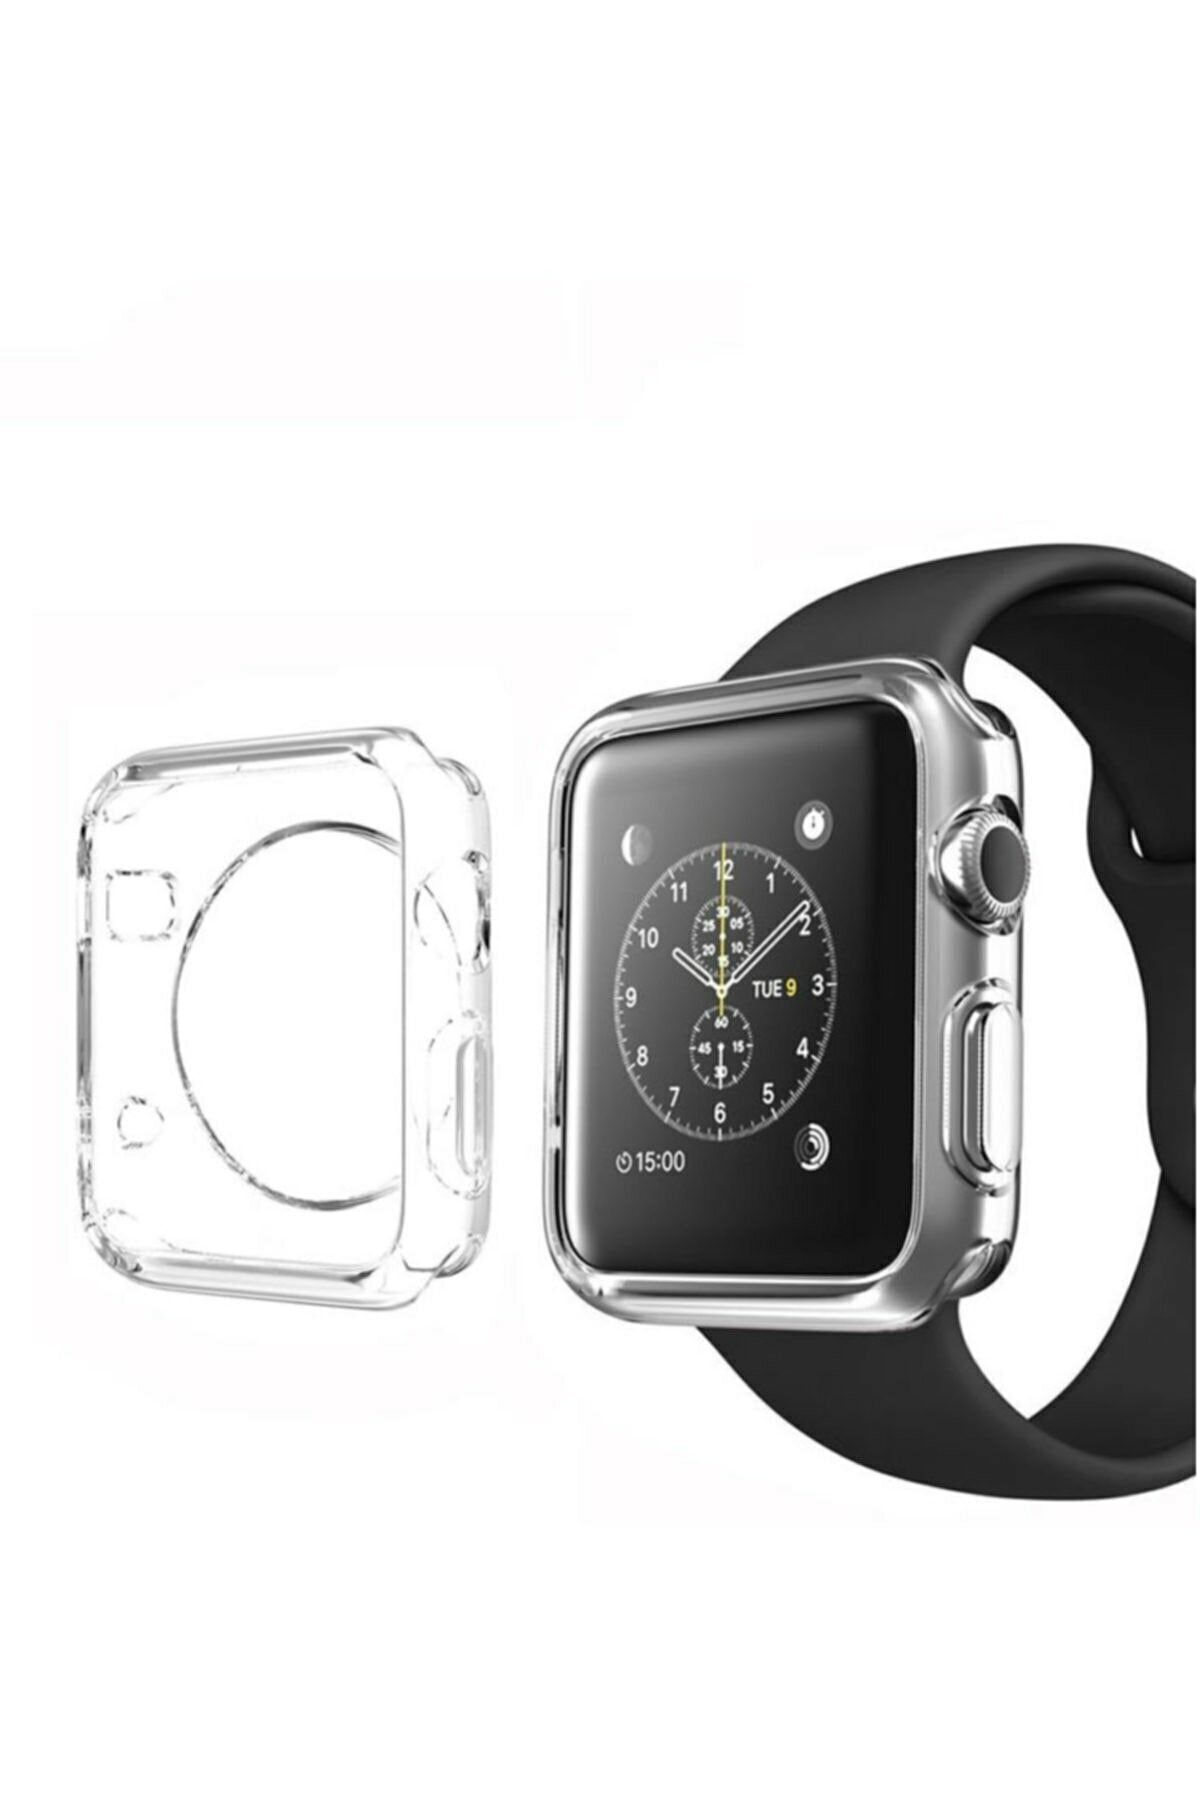 Microcase Samsung Galaxy Watch 42 Mm Silikon Kılıf - Şeffaf